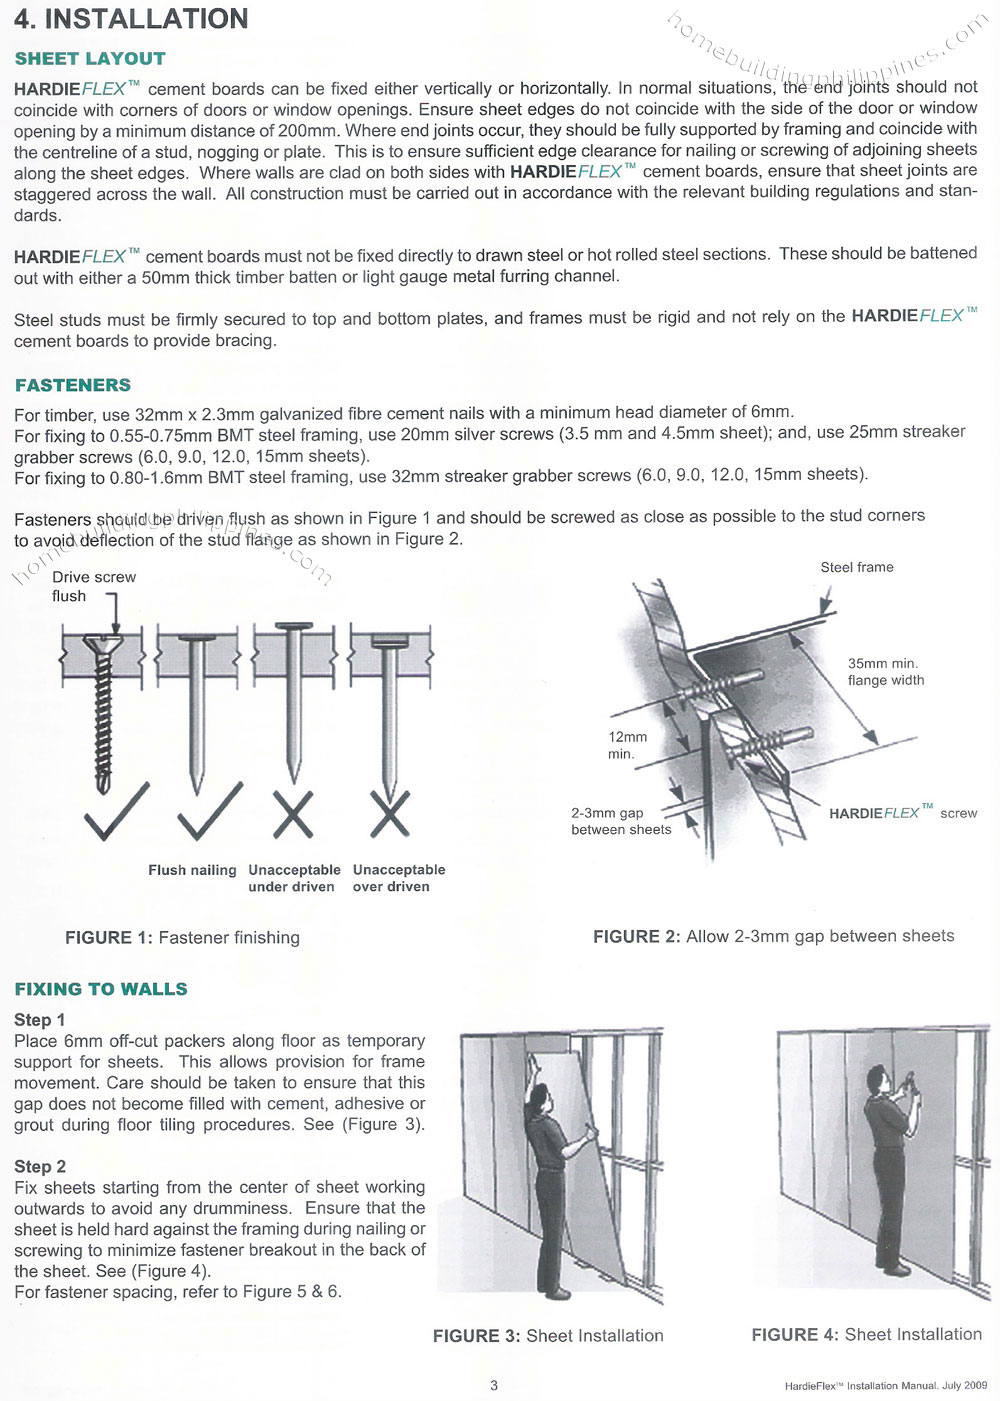 HardieFlex Durable Fiber Cement Board Installation Manual